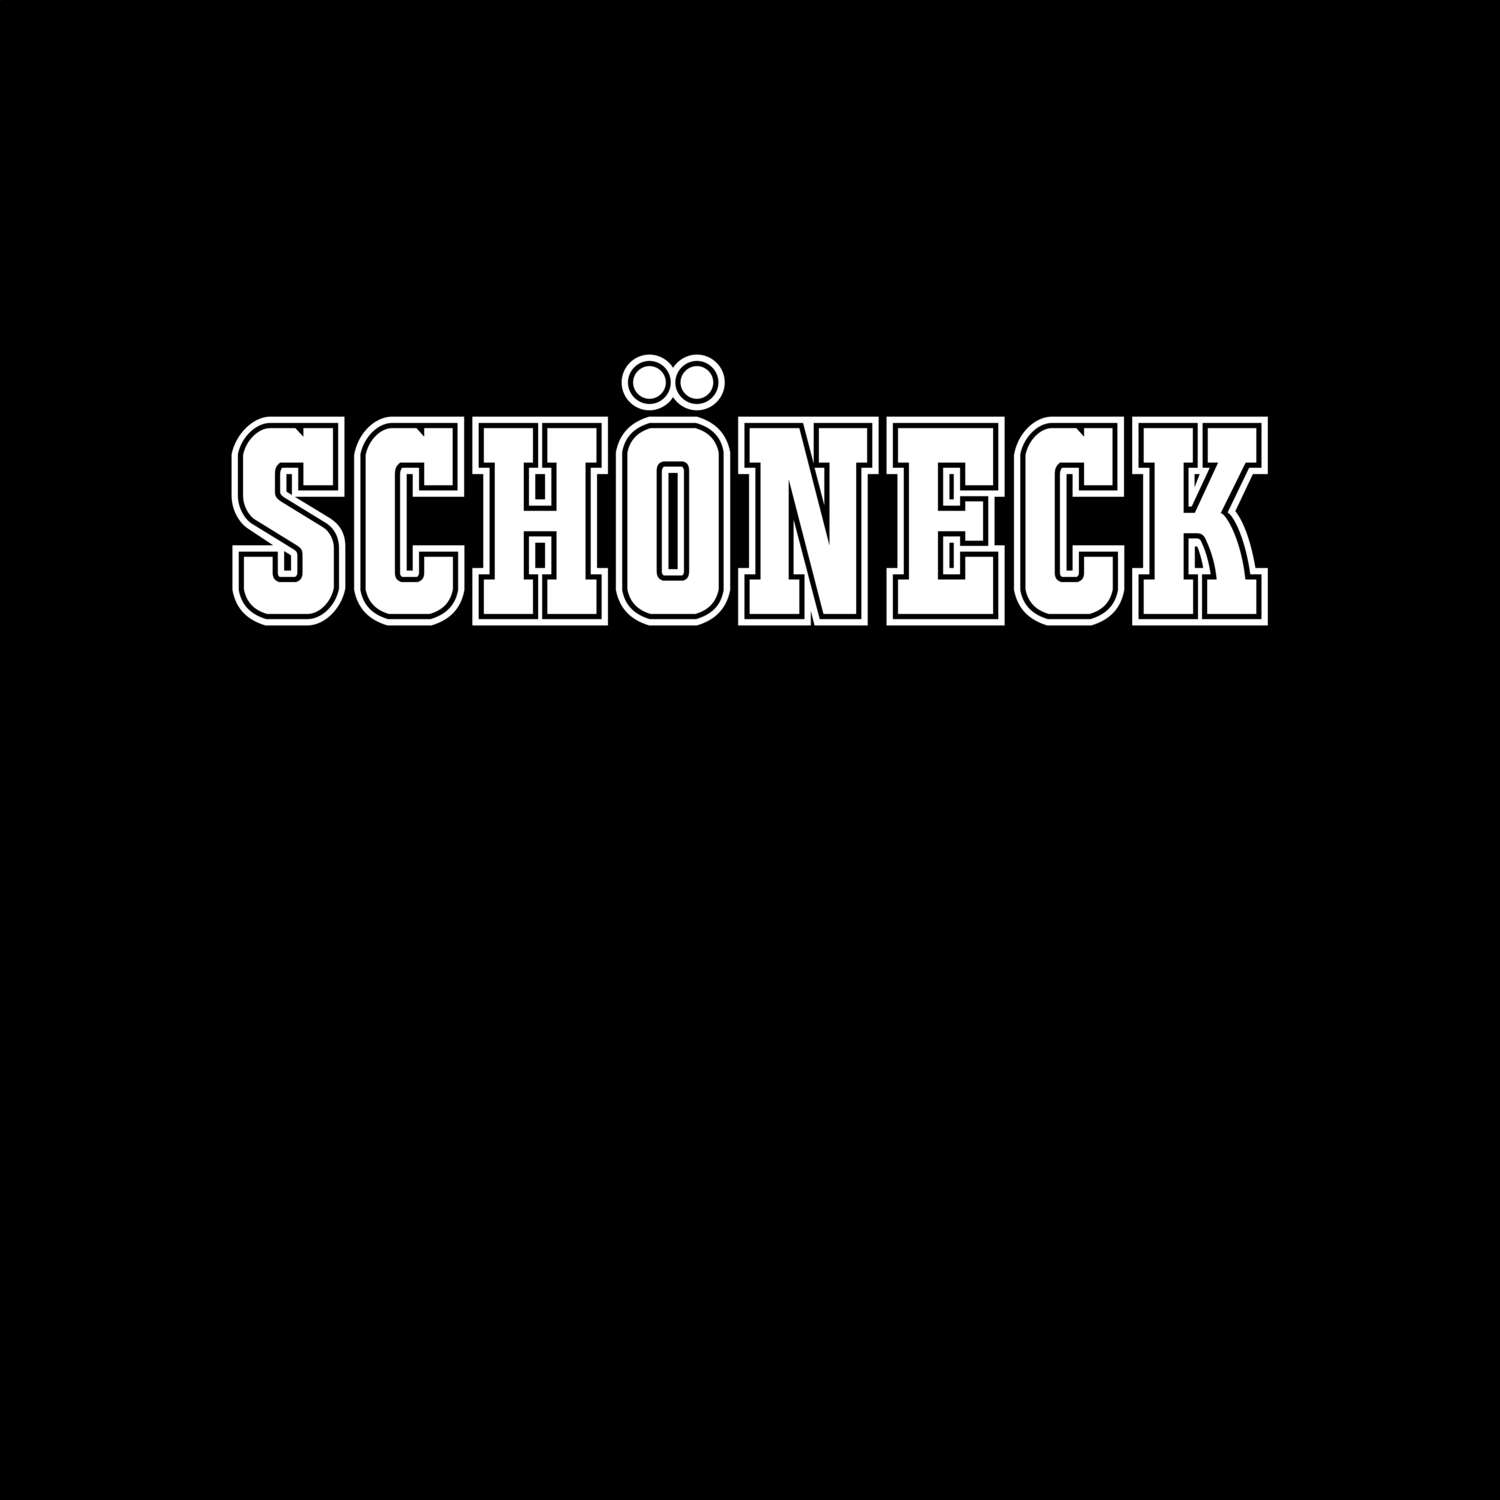 Schöneck T-Shirt »Classic«